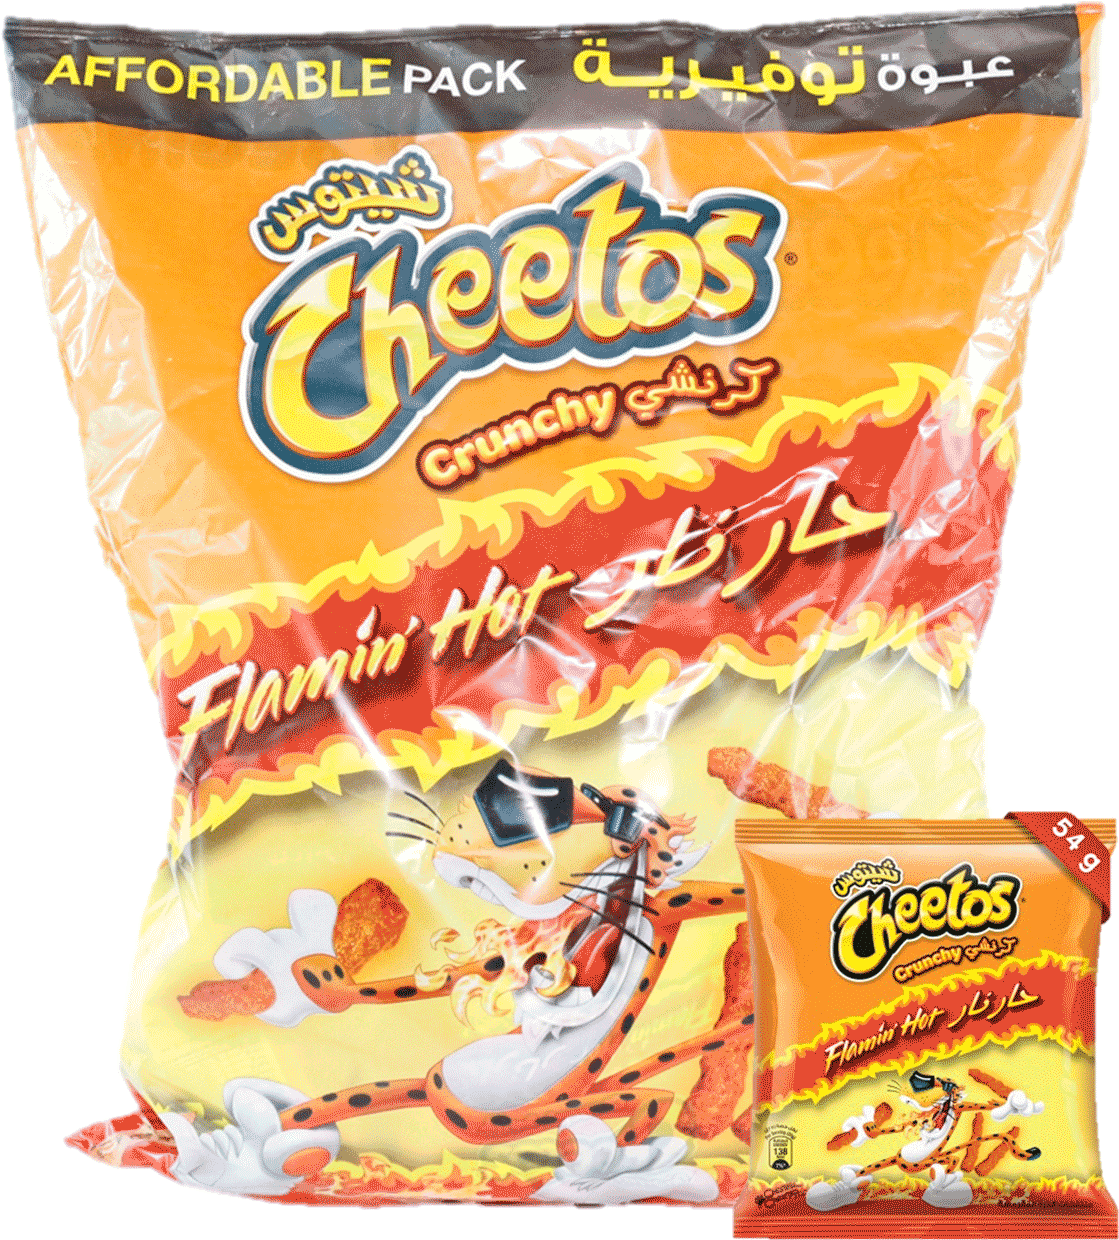 Crunchy cheetos crunchy pack PNG Clipart